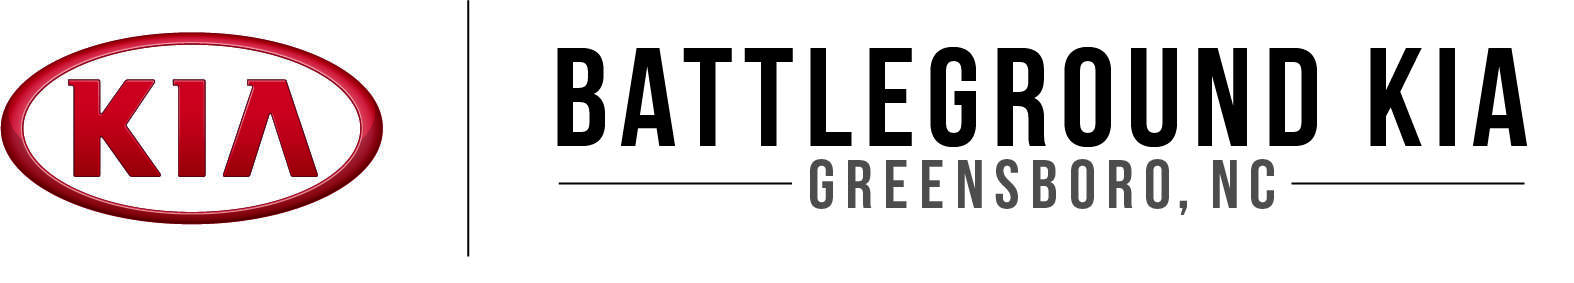 Battleground Kia Of Greensboro Better Business Bureau Profile